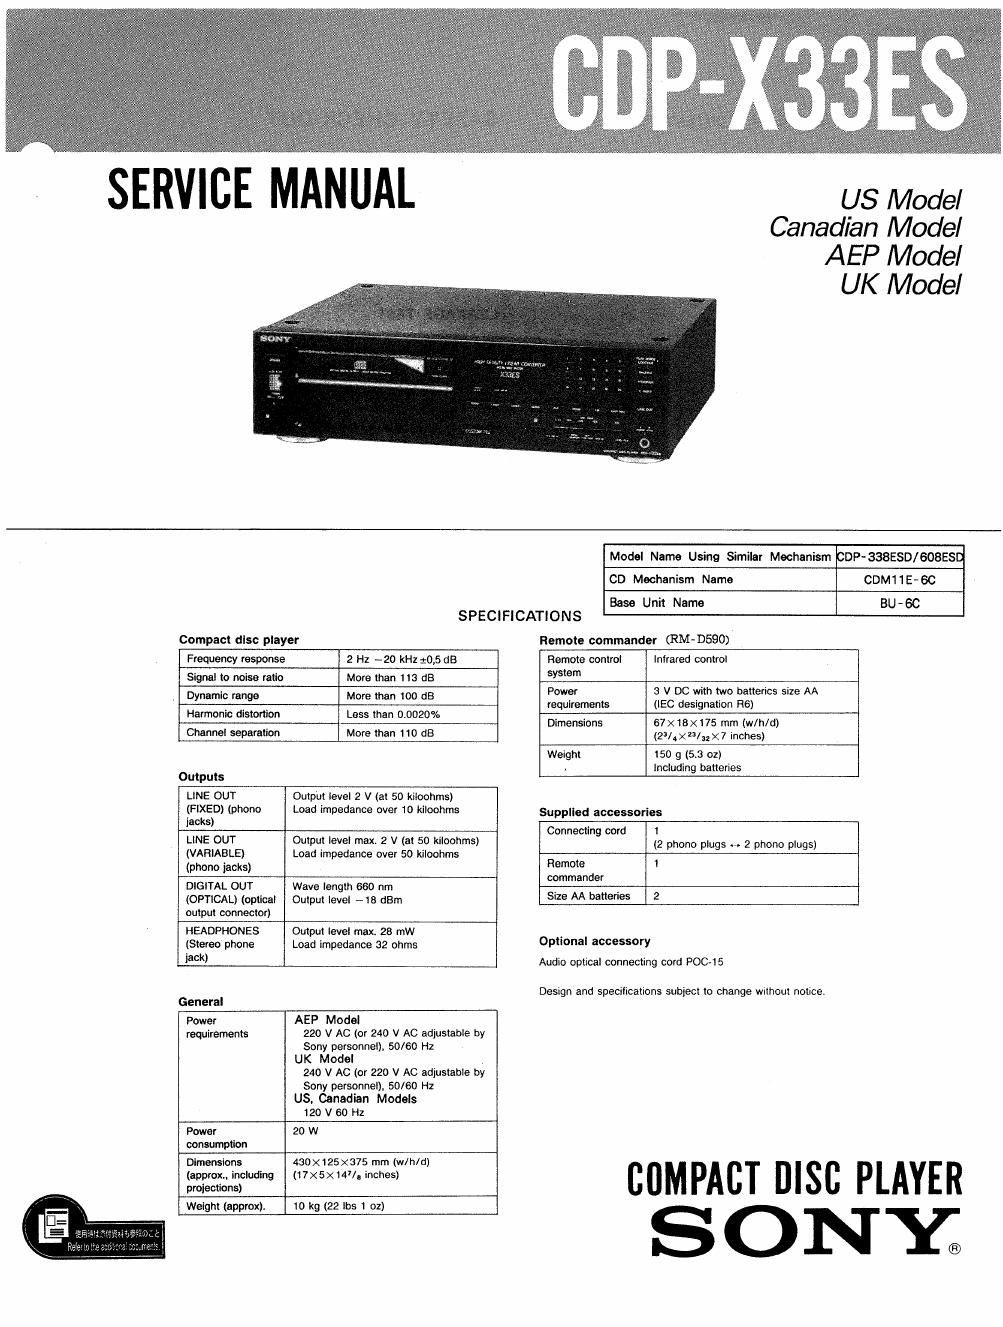 sony cdp x 33 es service manual